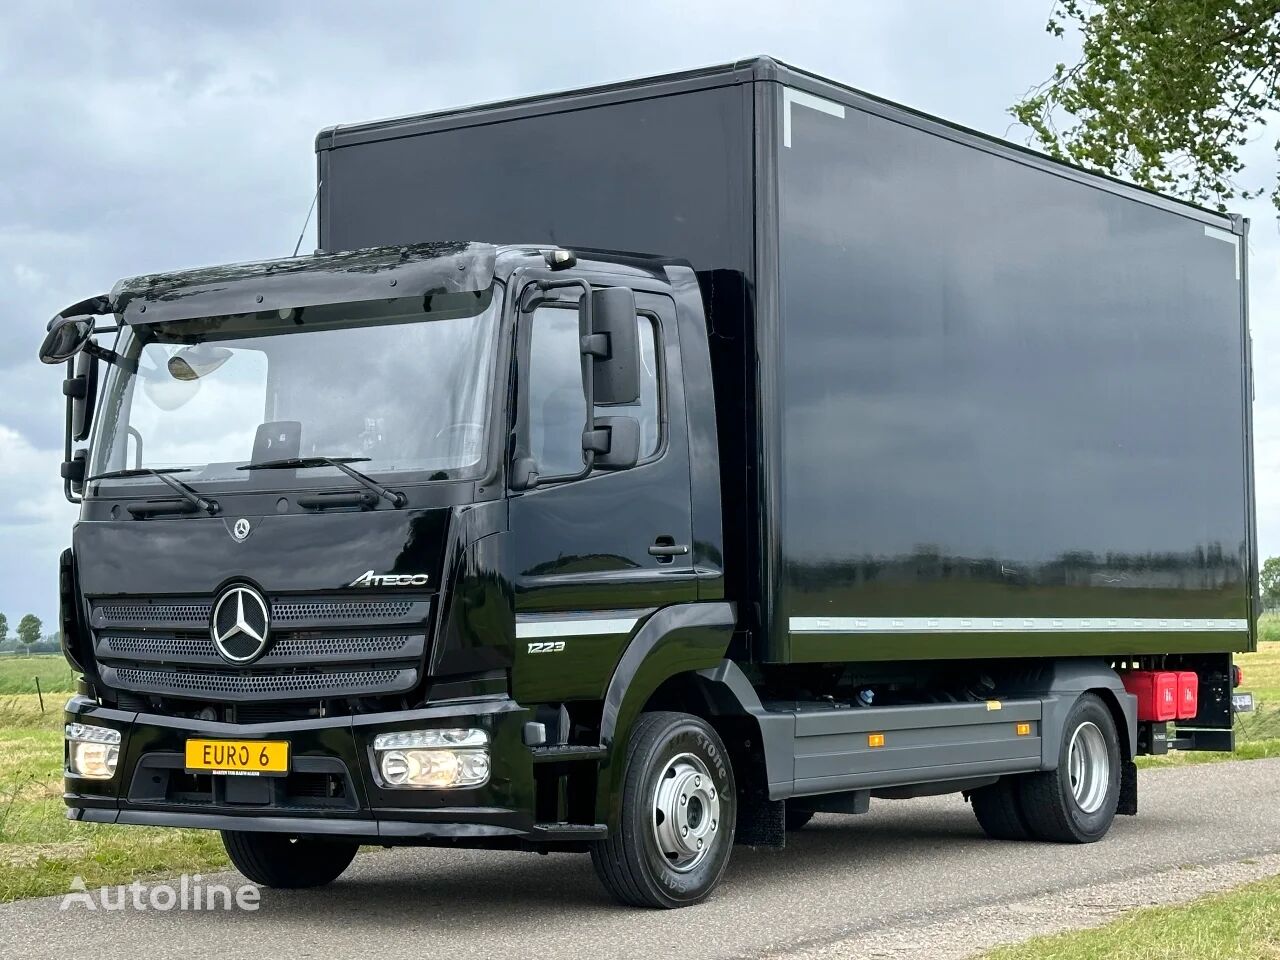 شاحنة مقفلة Mercedes-Benz Atego ATEGO1223L. EURO6.2020. 11990. 510x249x230